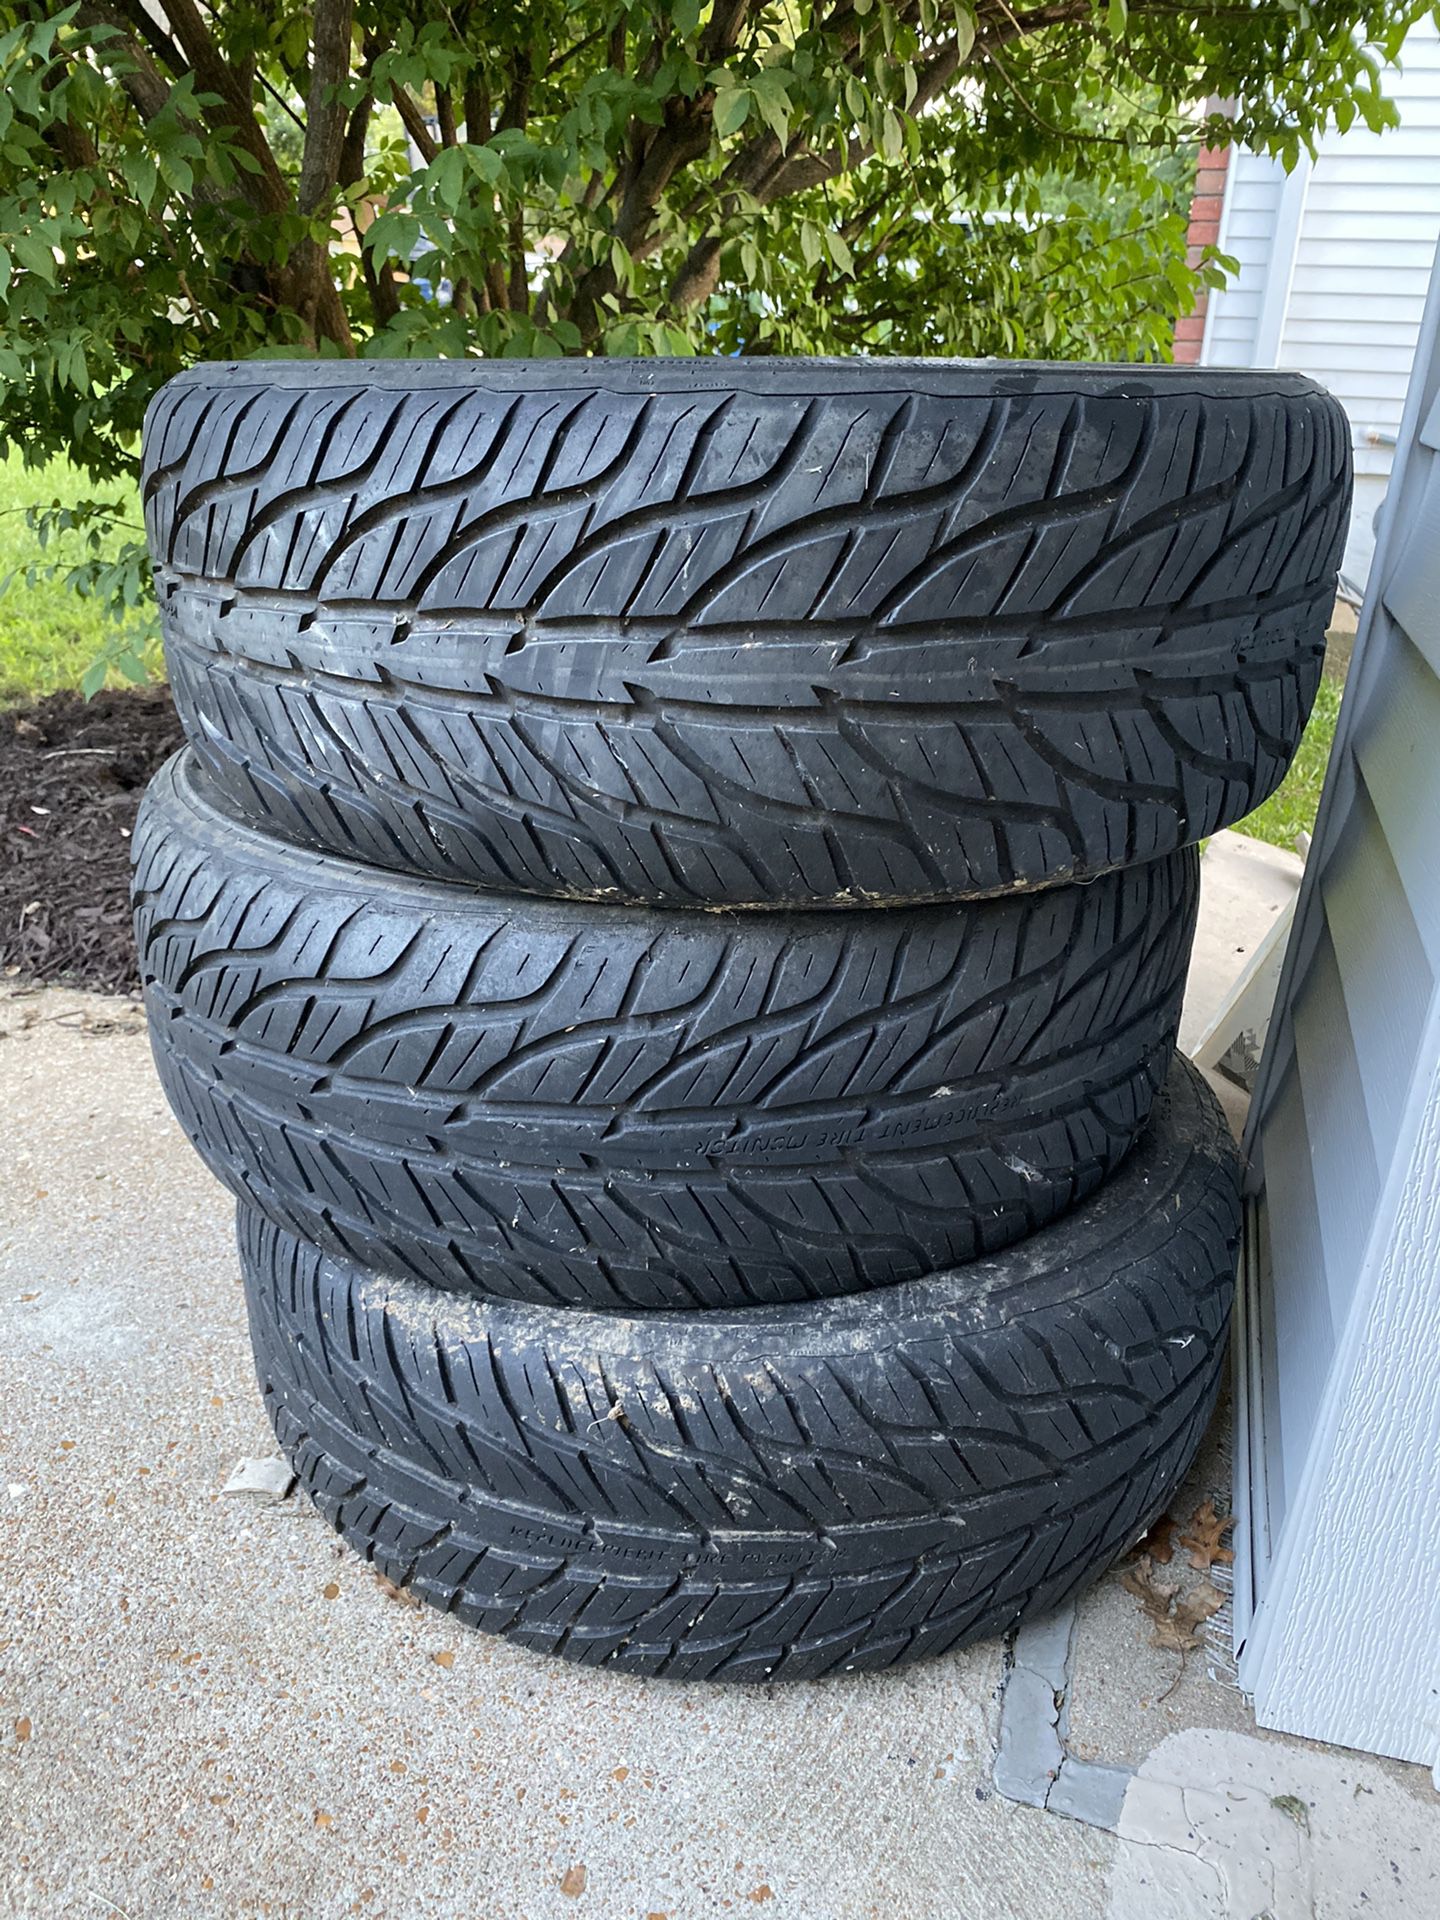 215/55/16 Tires